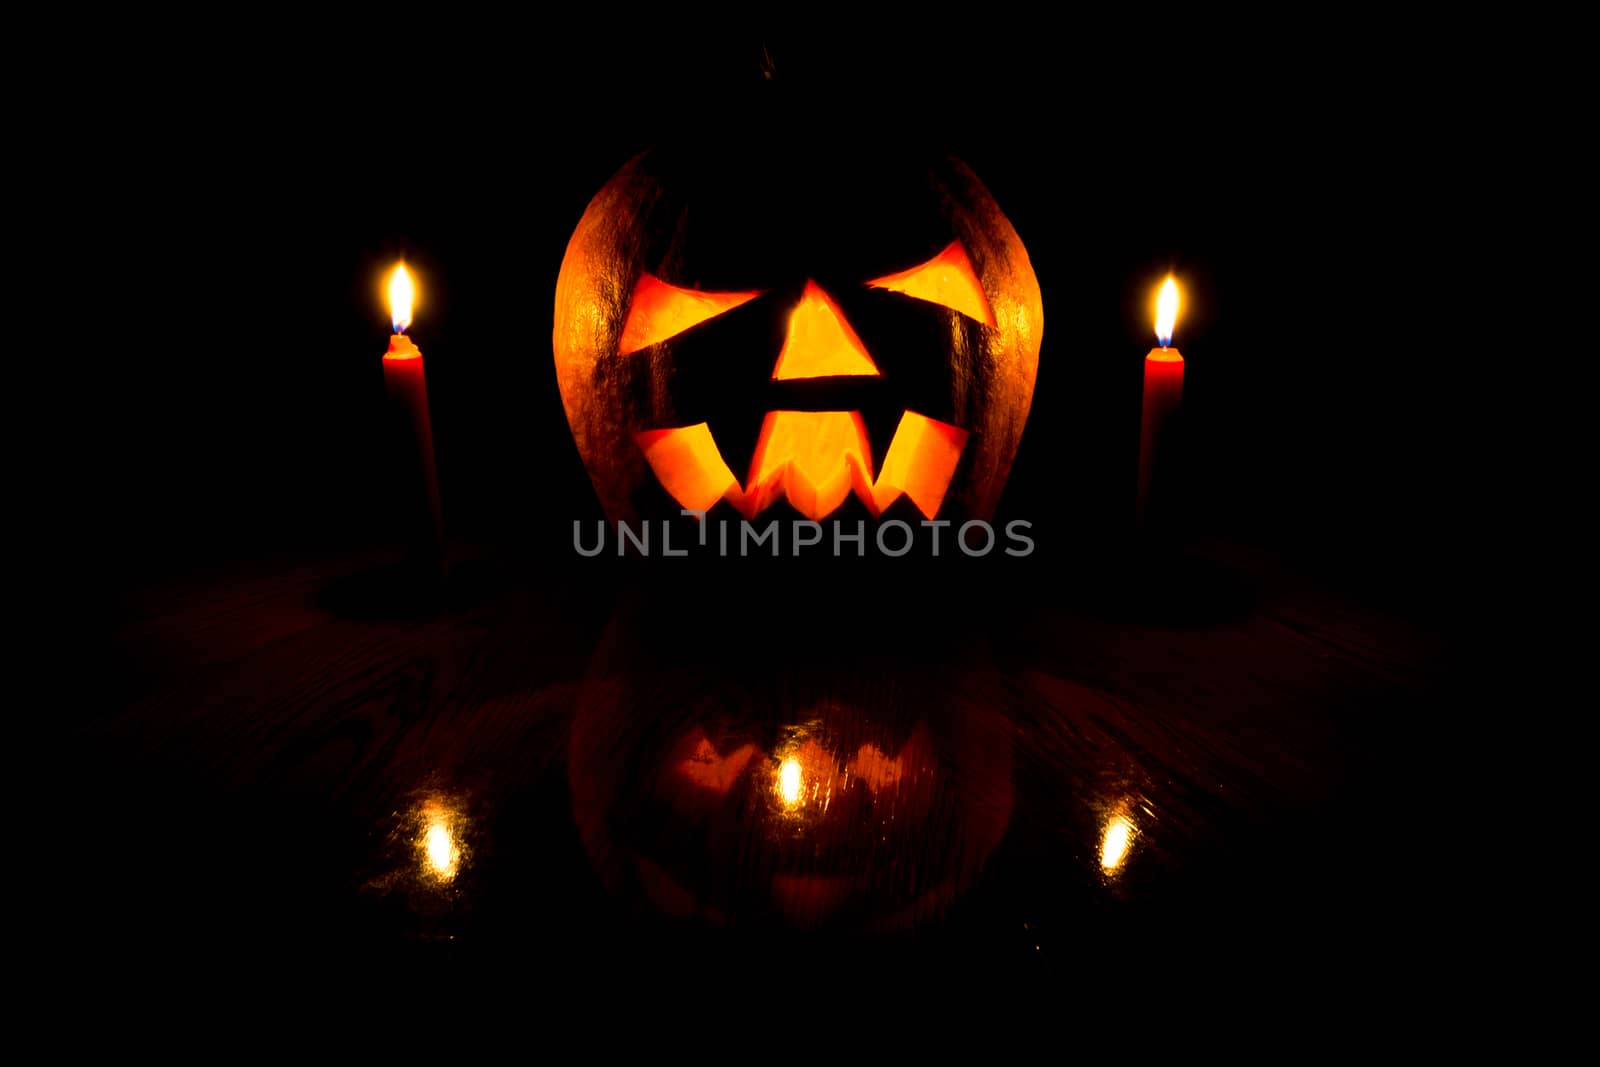 The photograph shows a pumpkin on Halloween